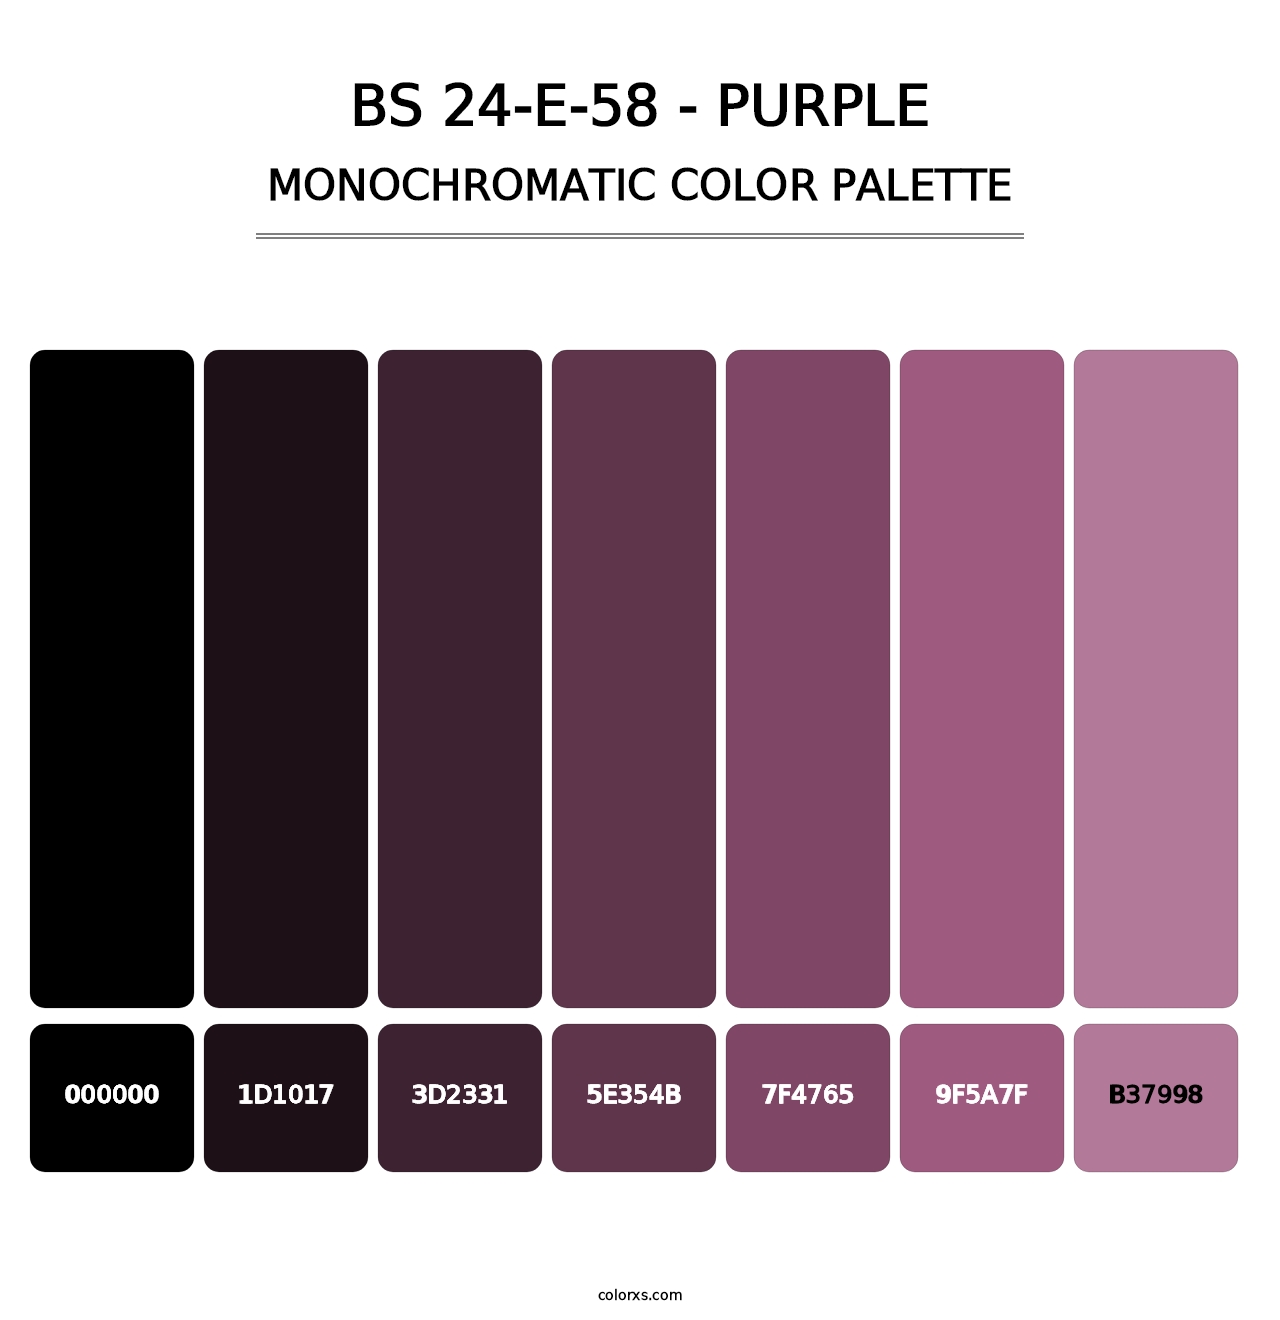 BS 24-E-58 - Purple - Monochromatic Color Palette